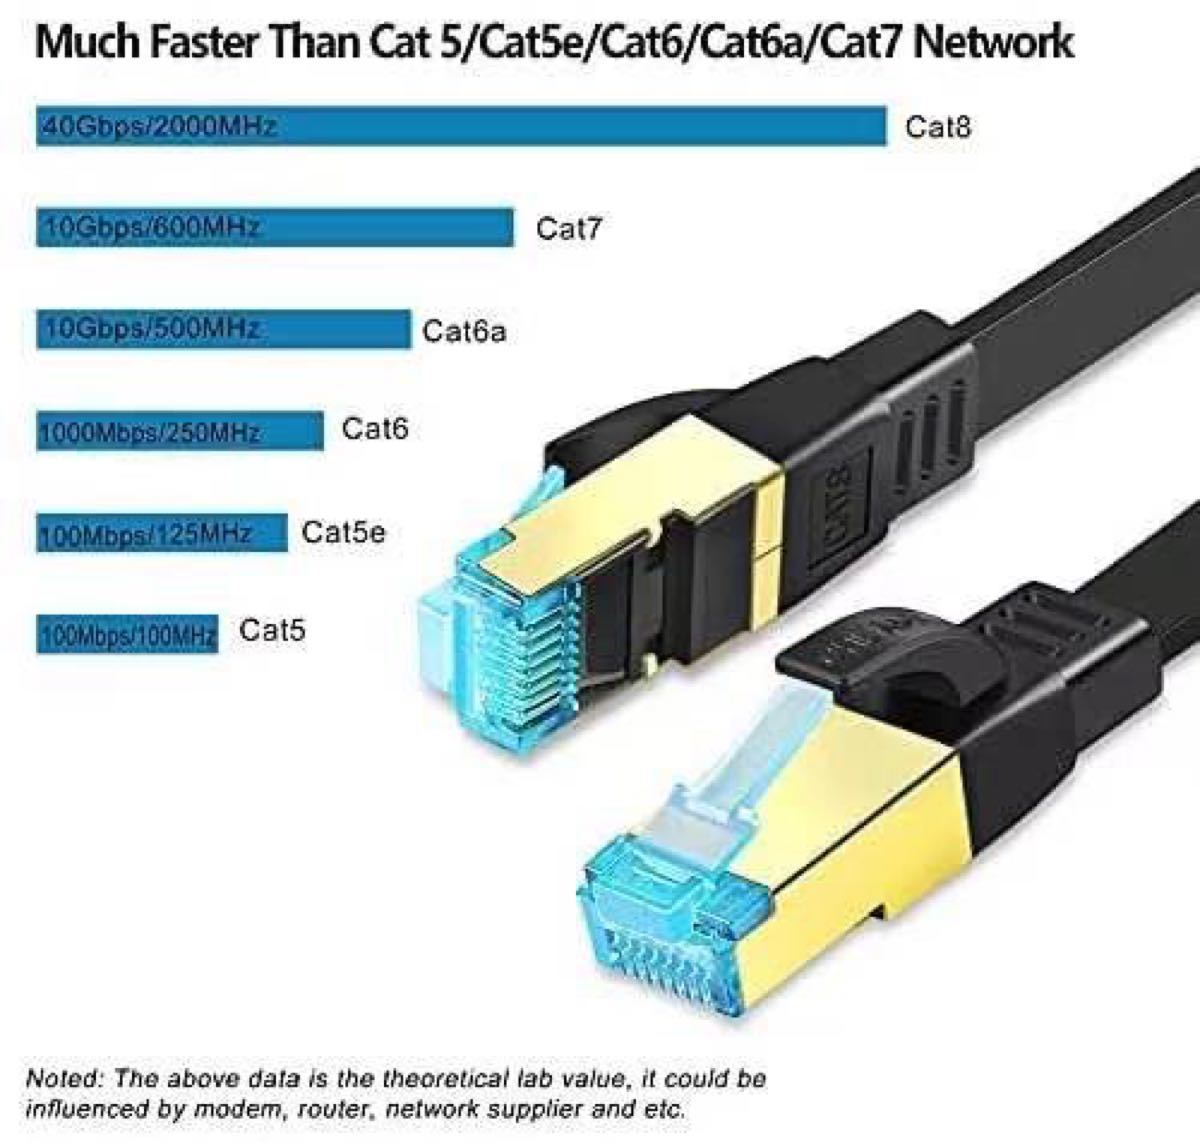 LANケーブル CAT8 超高速  40Gbps 2000MHz対応(10M)